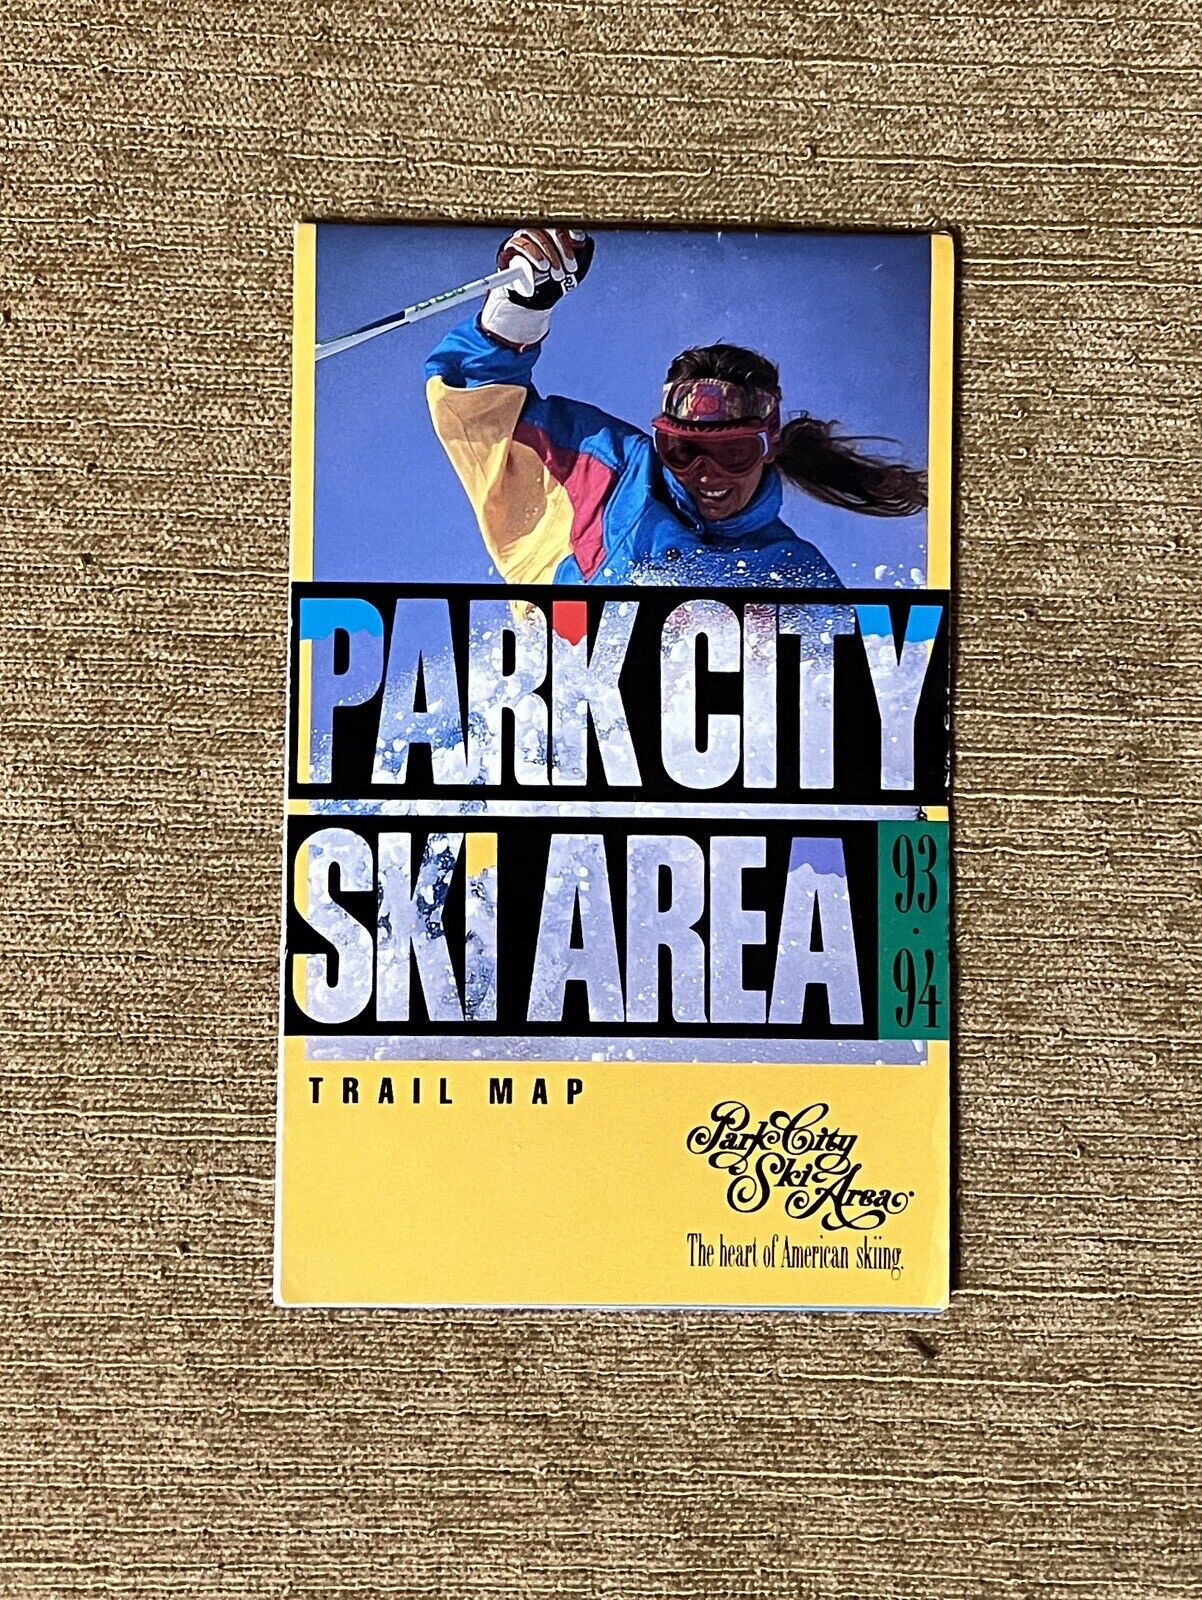 PARK CITY 1993-94 Ski Run Brochure Trail Map UTAH Resort Travel Souvenir